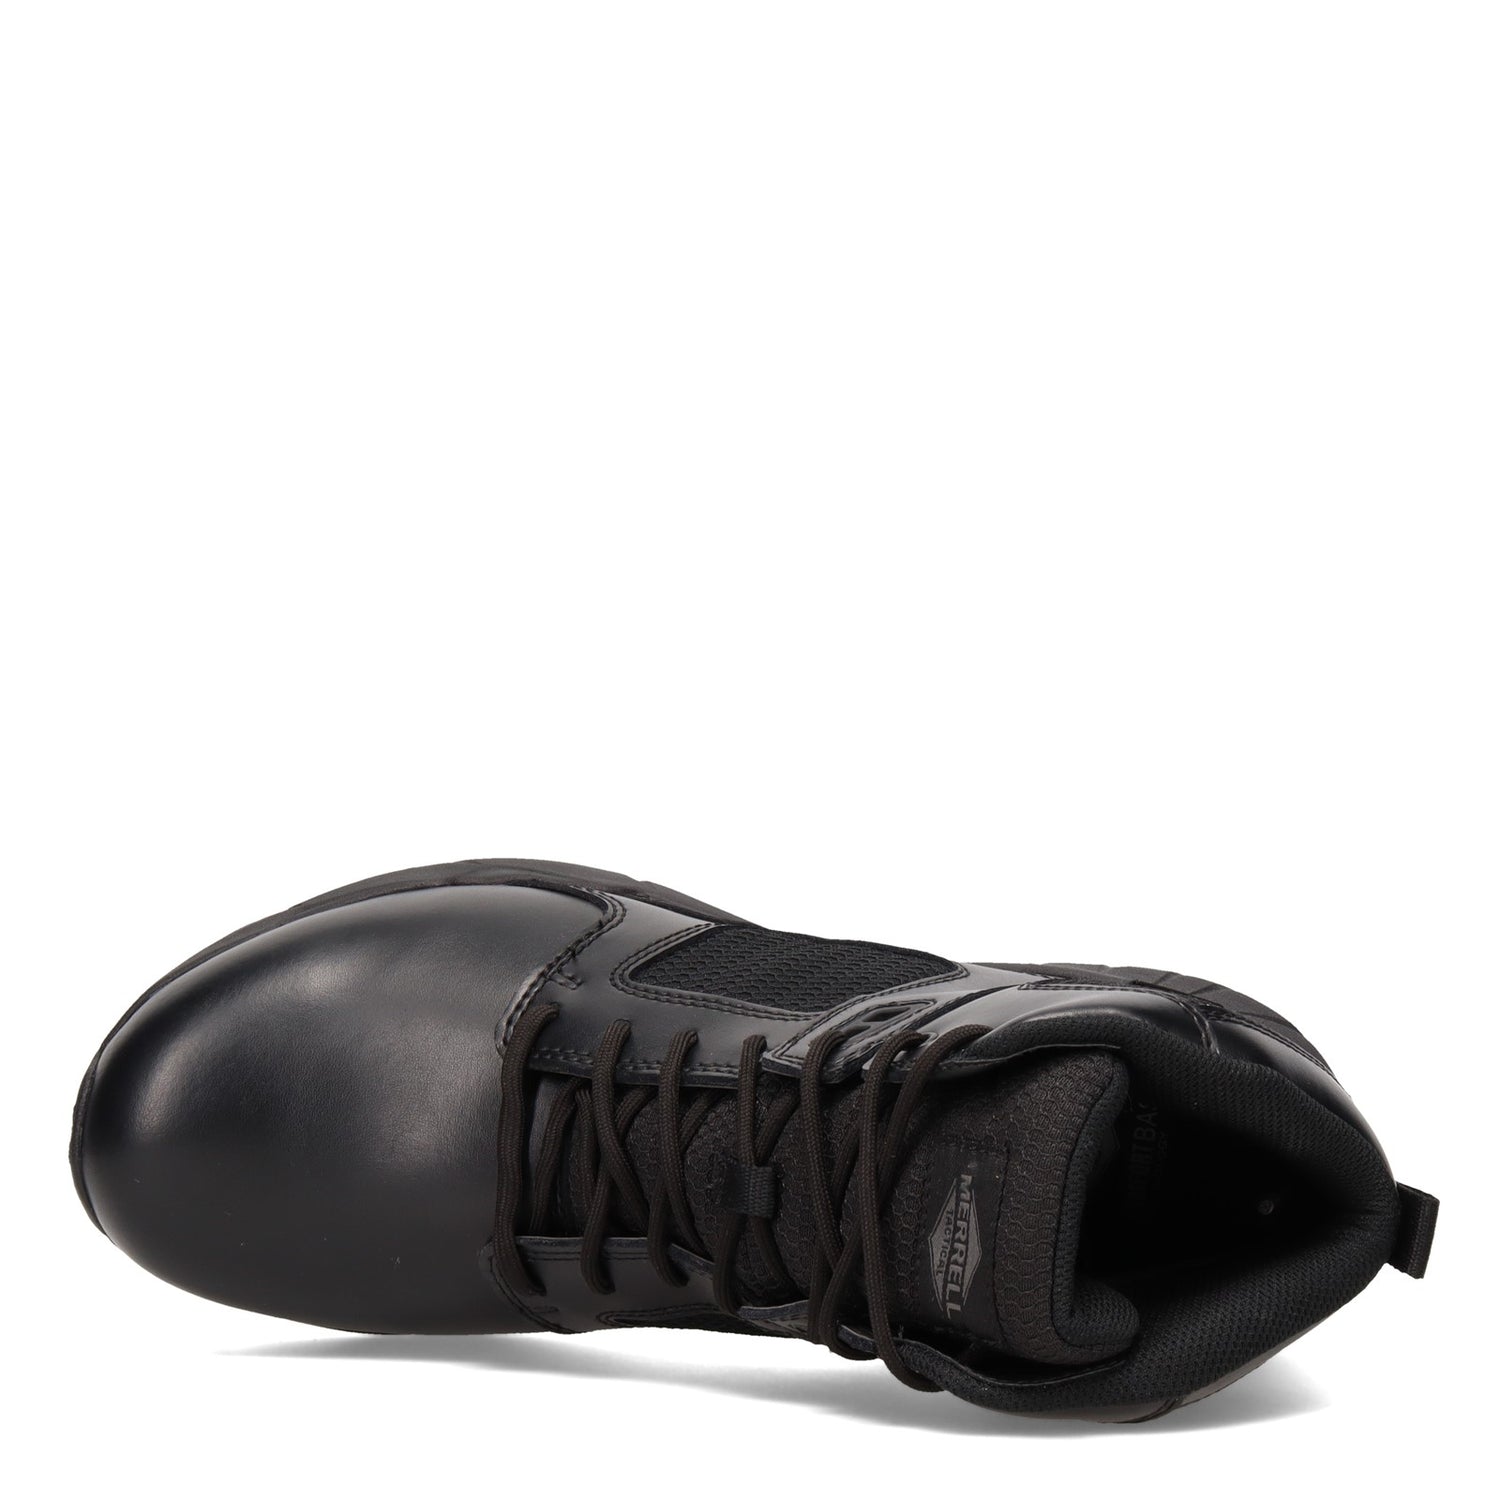 Peltz Shoes  Men's Merrell Work Fullbench Tactical Mid Work Boot BLACK J099439